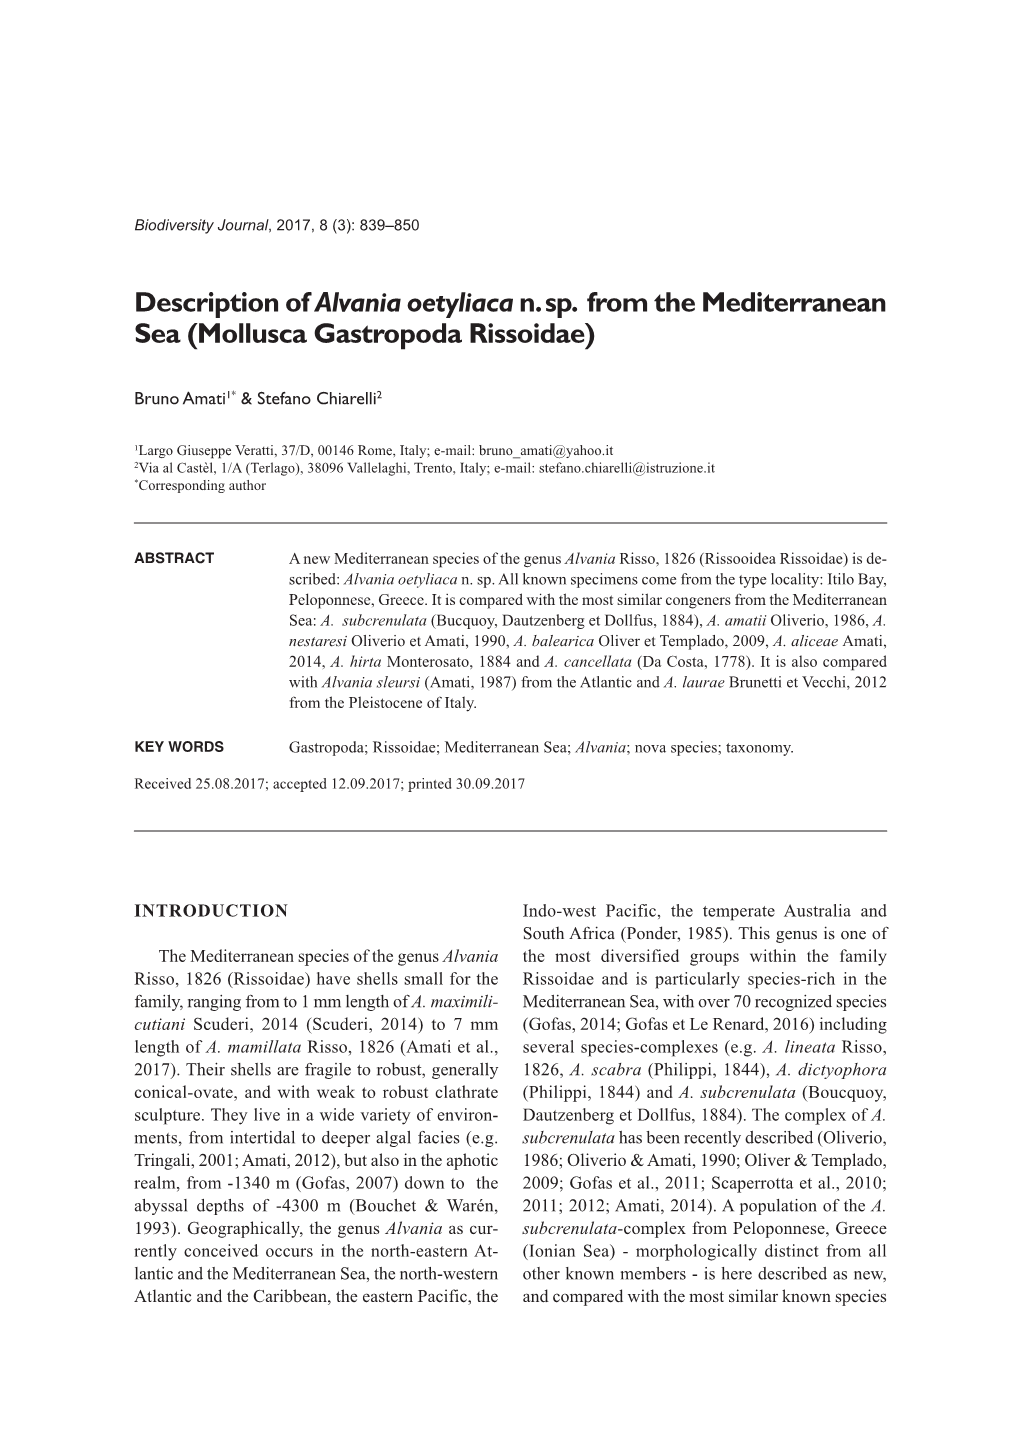 Description of Alvania Oetyliaca N. Sp. from the Mediterranean Sea (Mollusca Gastropoda Rissoidae)